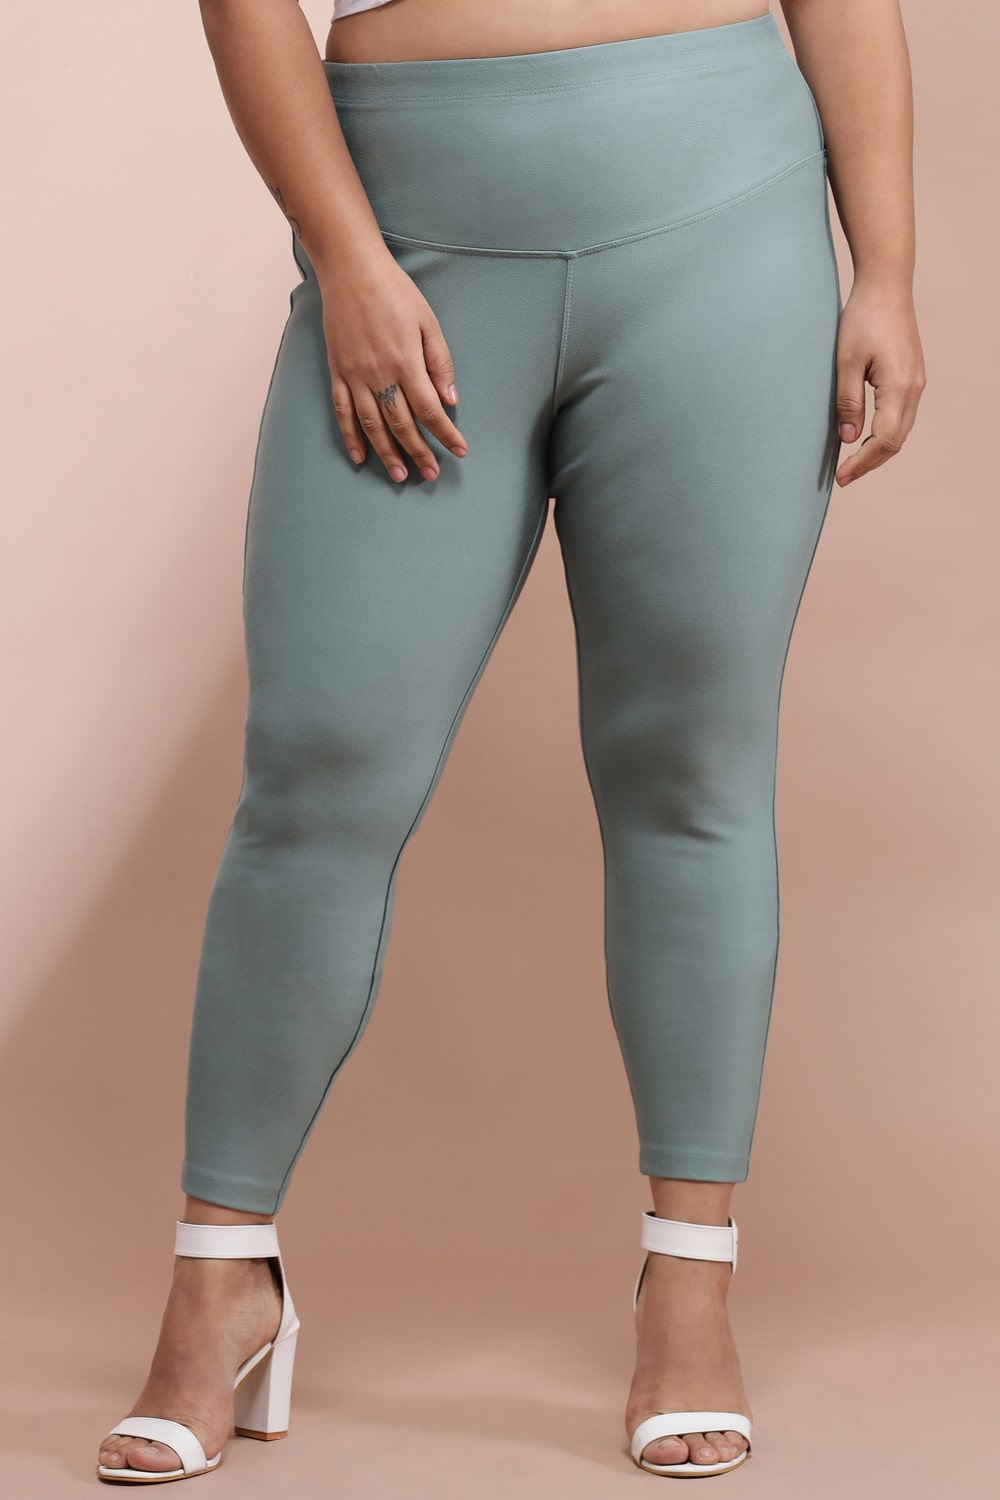 Gibobby Yoga Pants for Women plus Size Slimming Women's Yoga Abdomen 100%  Cotton Yoga Pants with Pockets for Women Leggings for Women